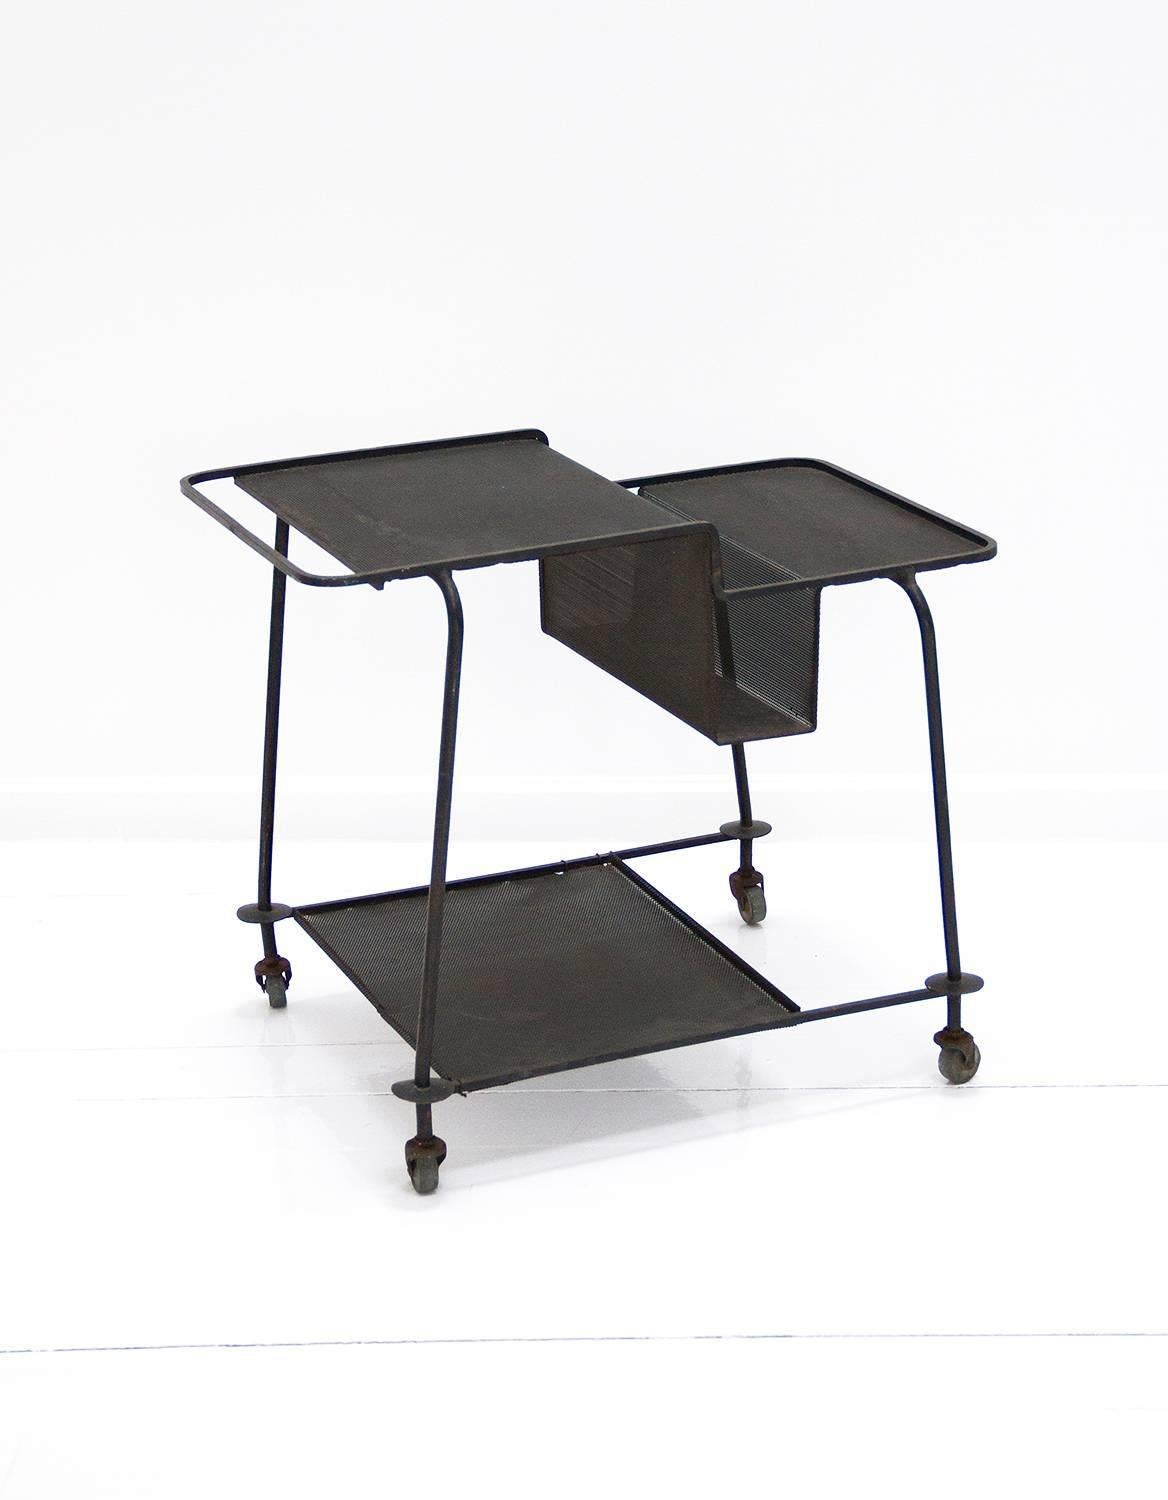 Original black serving cart designed by Mathieu Matégot. Made of lacquered iron. In good original condition preserving patina.
Manufactured in Ateliers Matégot, circa 1950, France.
 